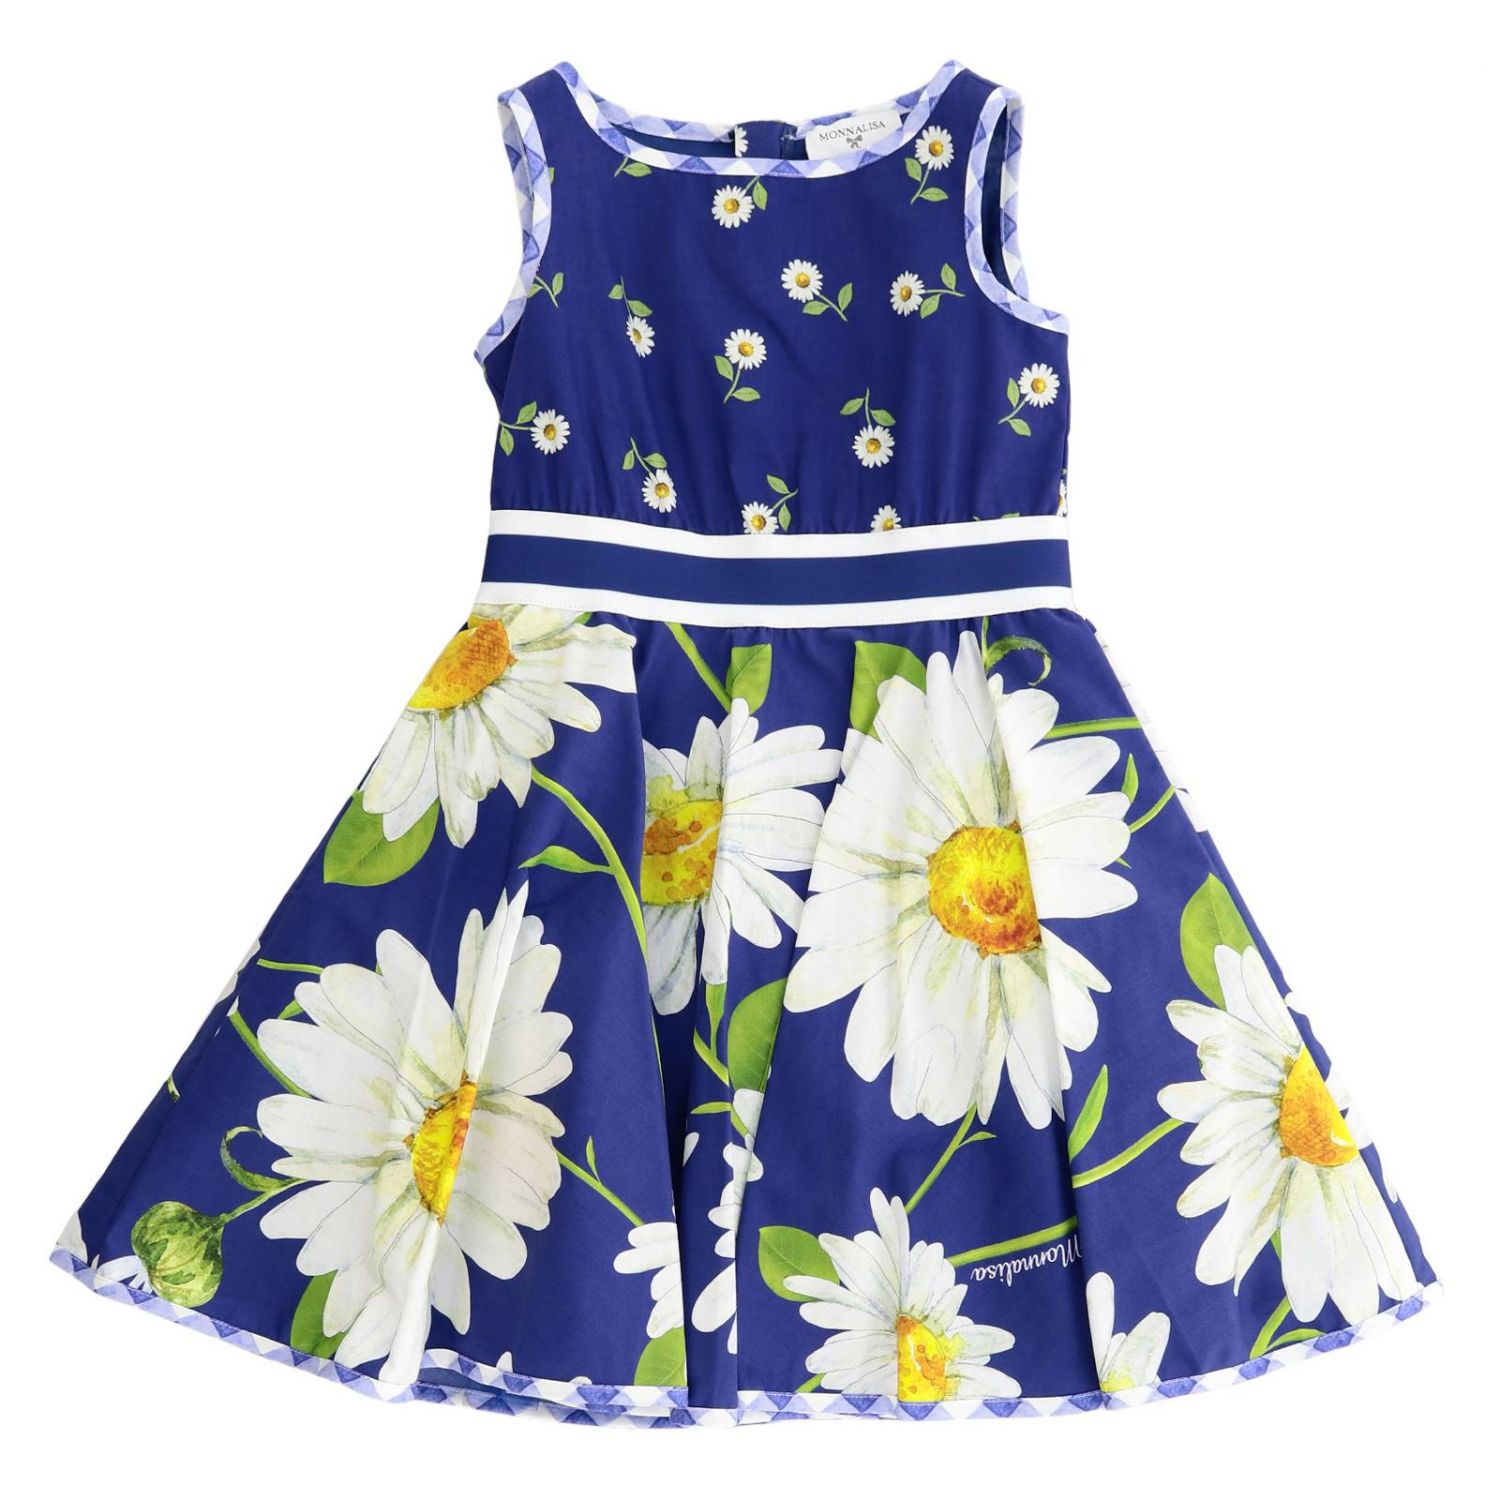 Monnalisa Outlet: dress for girls - Blue | Monnalisa dress 113910 3654 ...